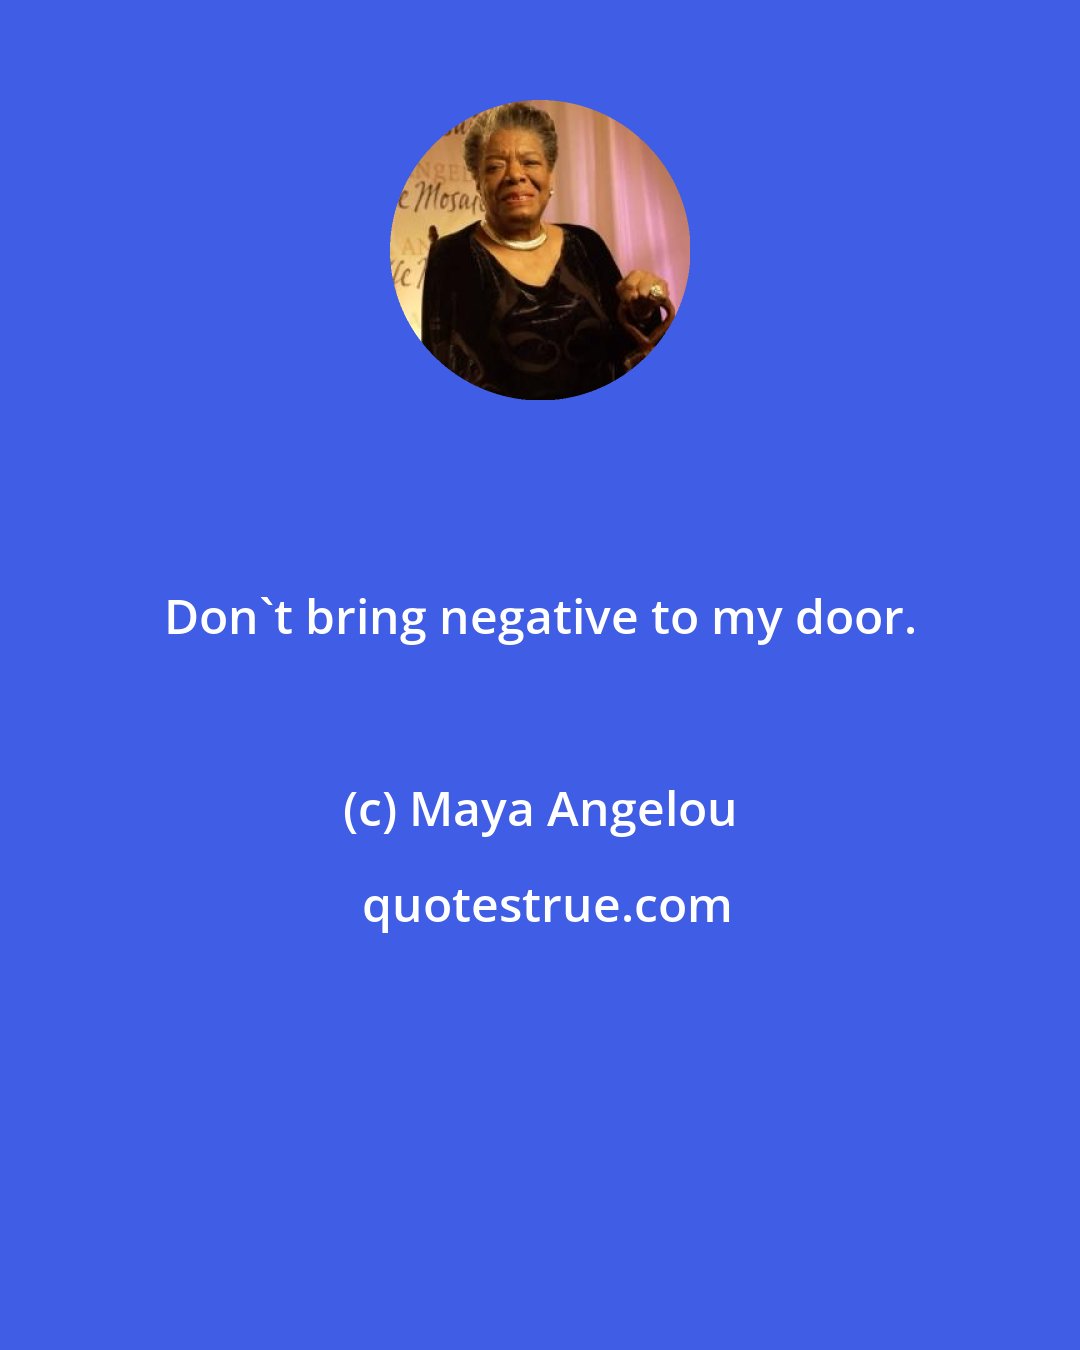 Maya Angelou: Don't bring negative to my door.